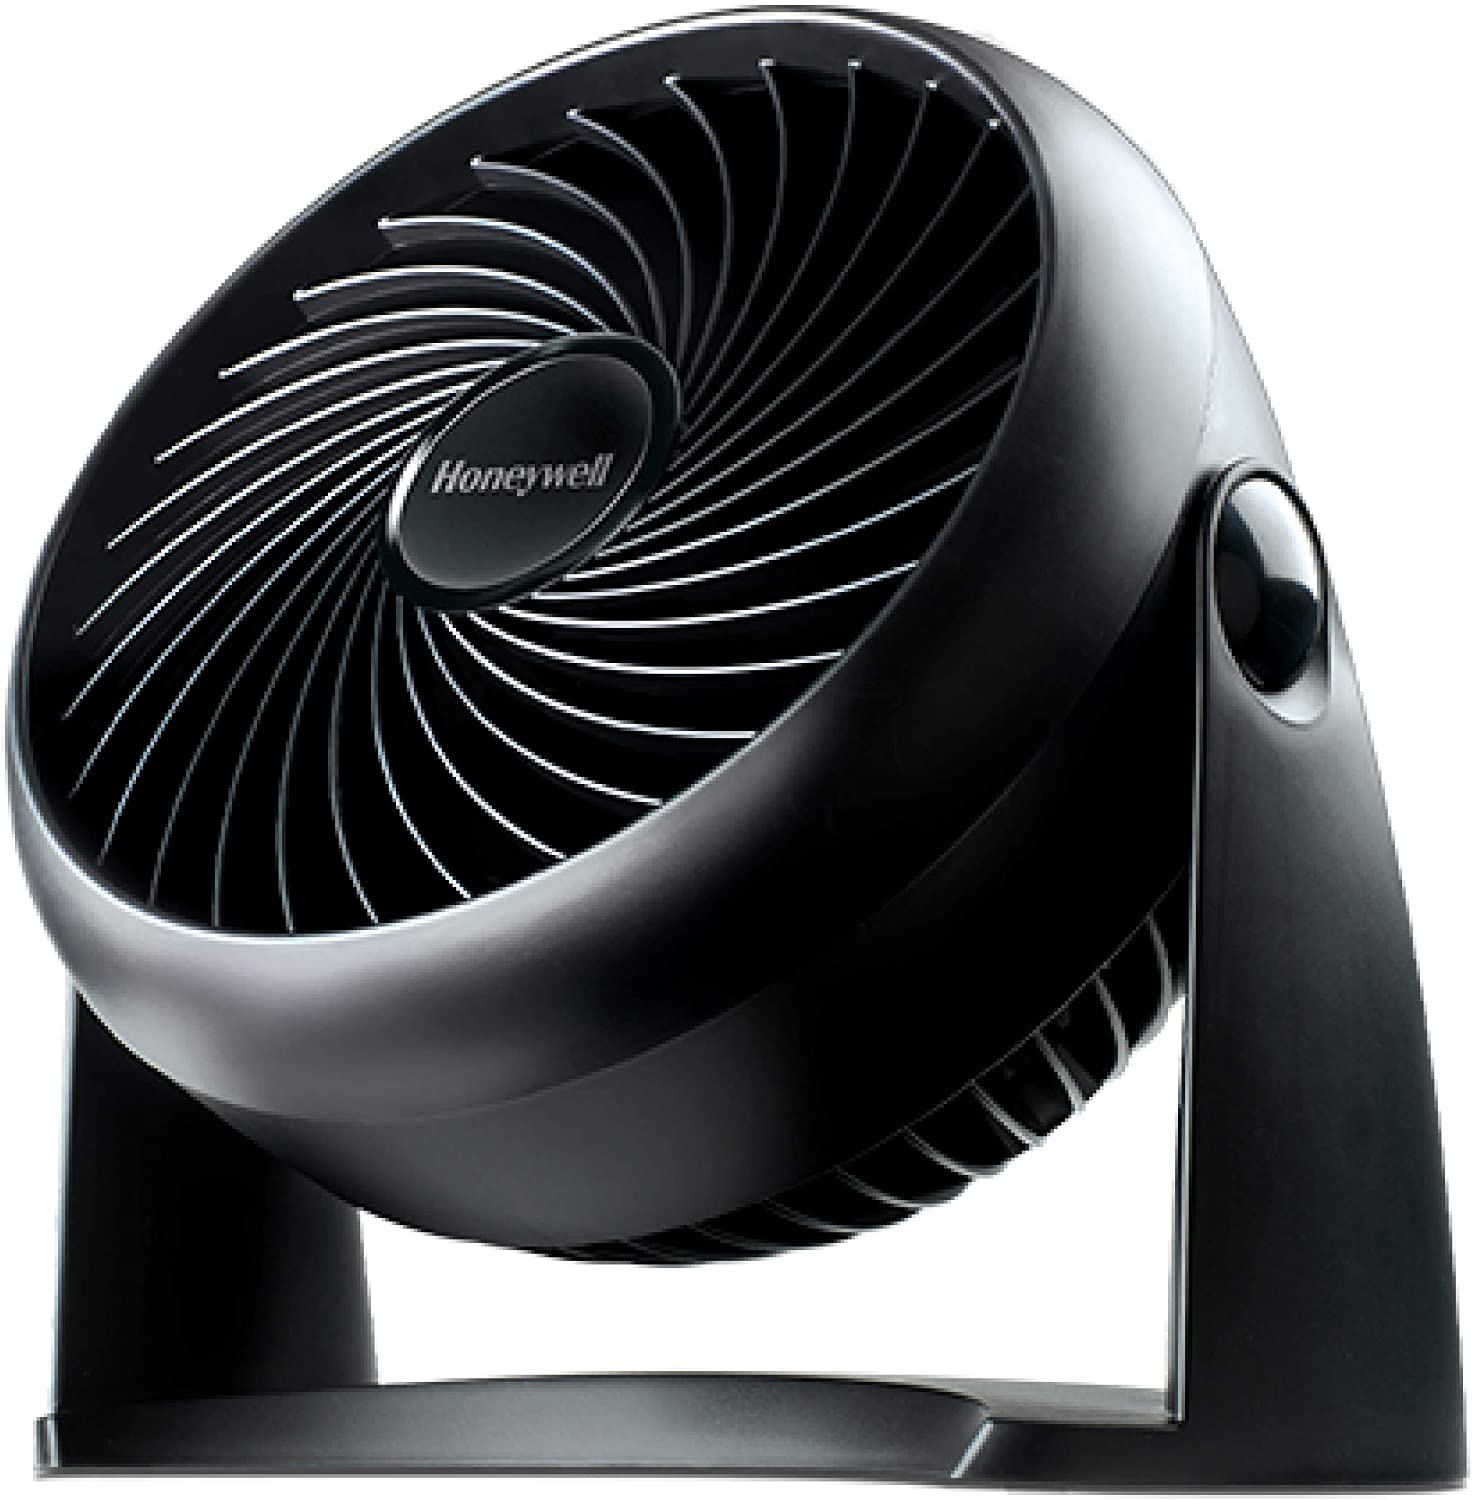 Honeywell Turbo Force Energy Saving Office Fan, 10.9-Inch